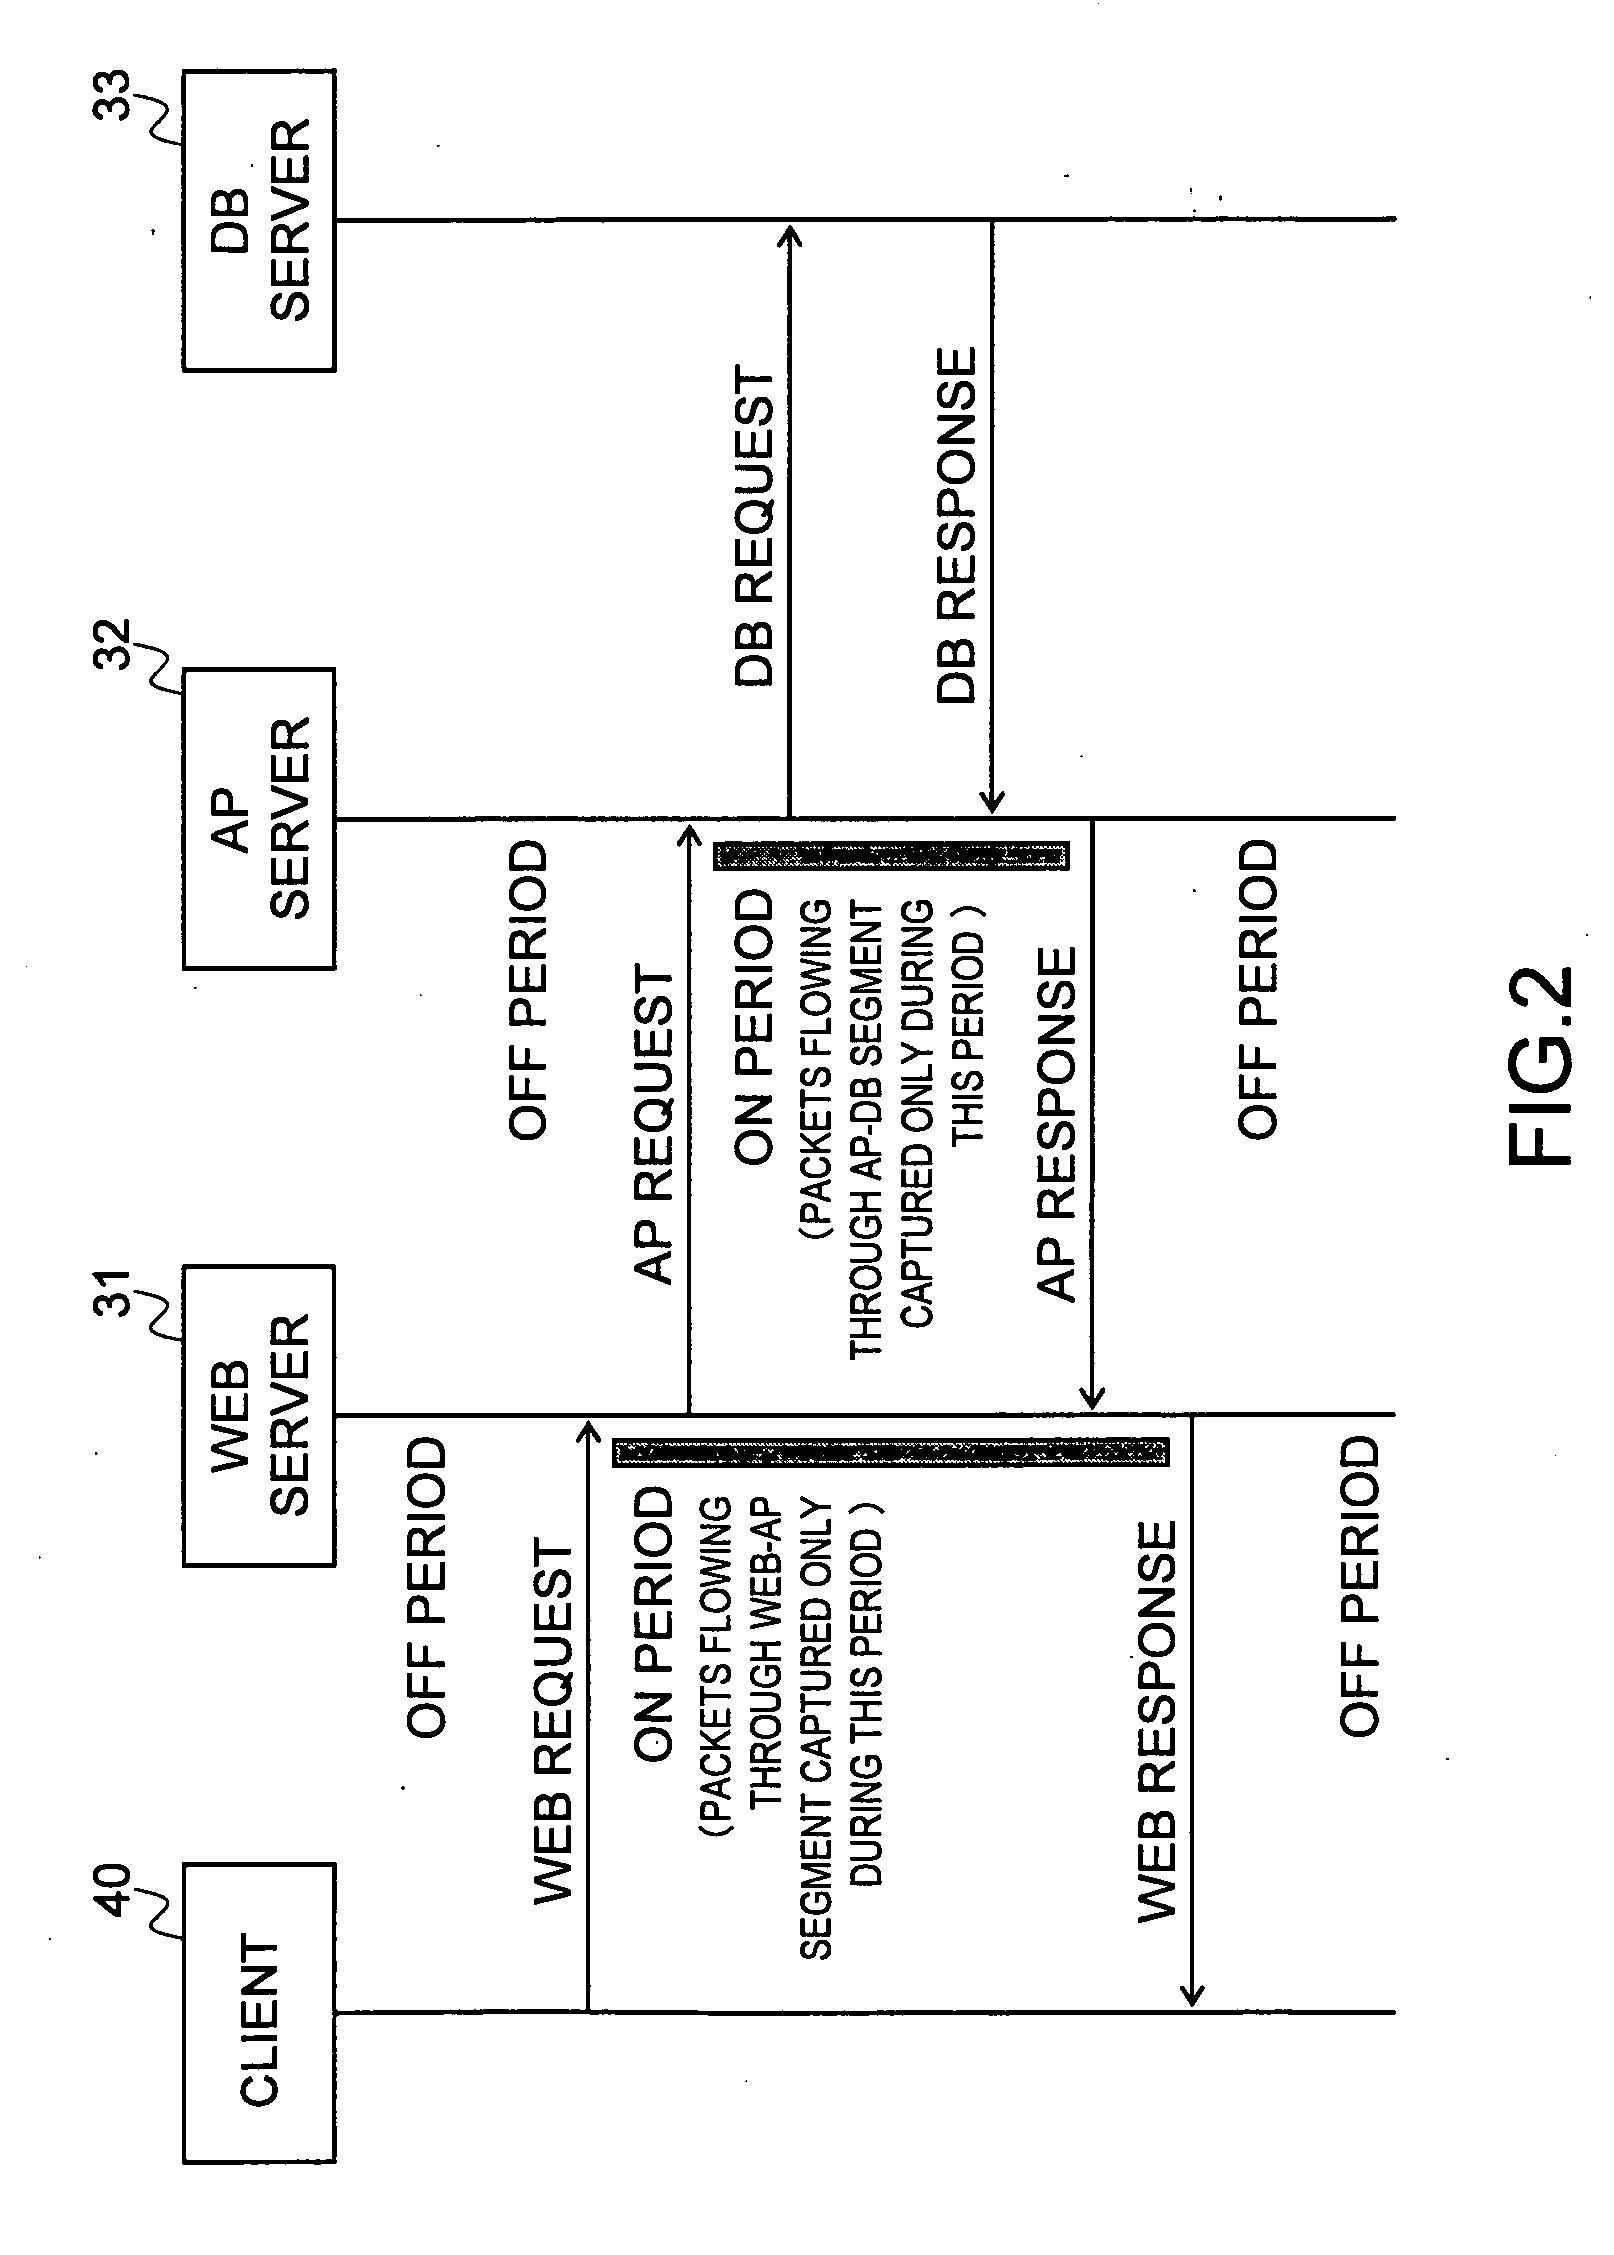 System analysis apparatus and method